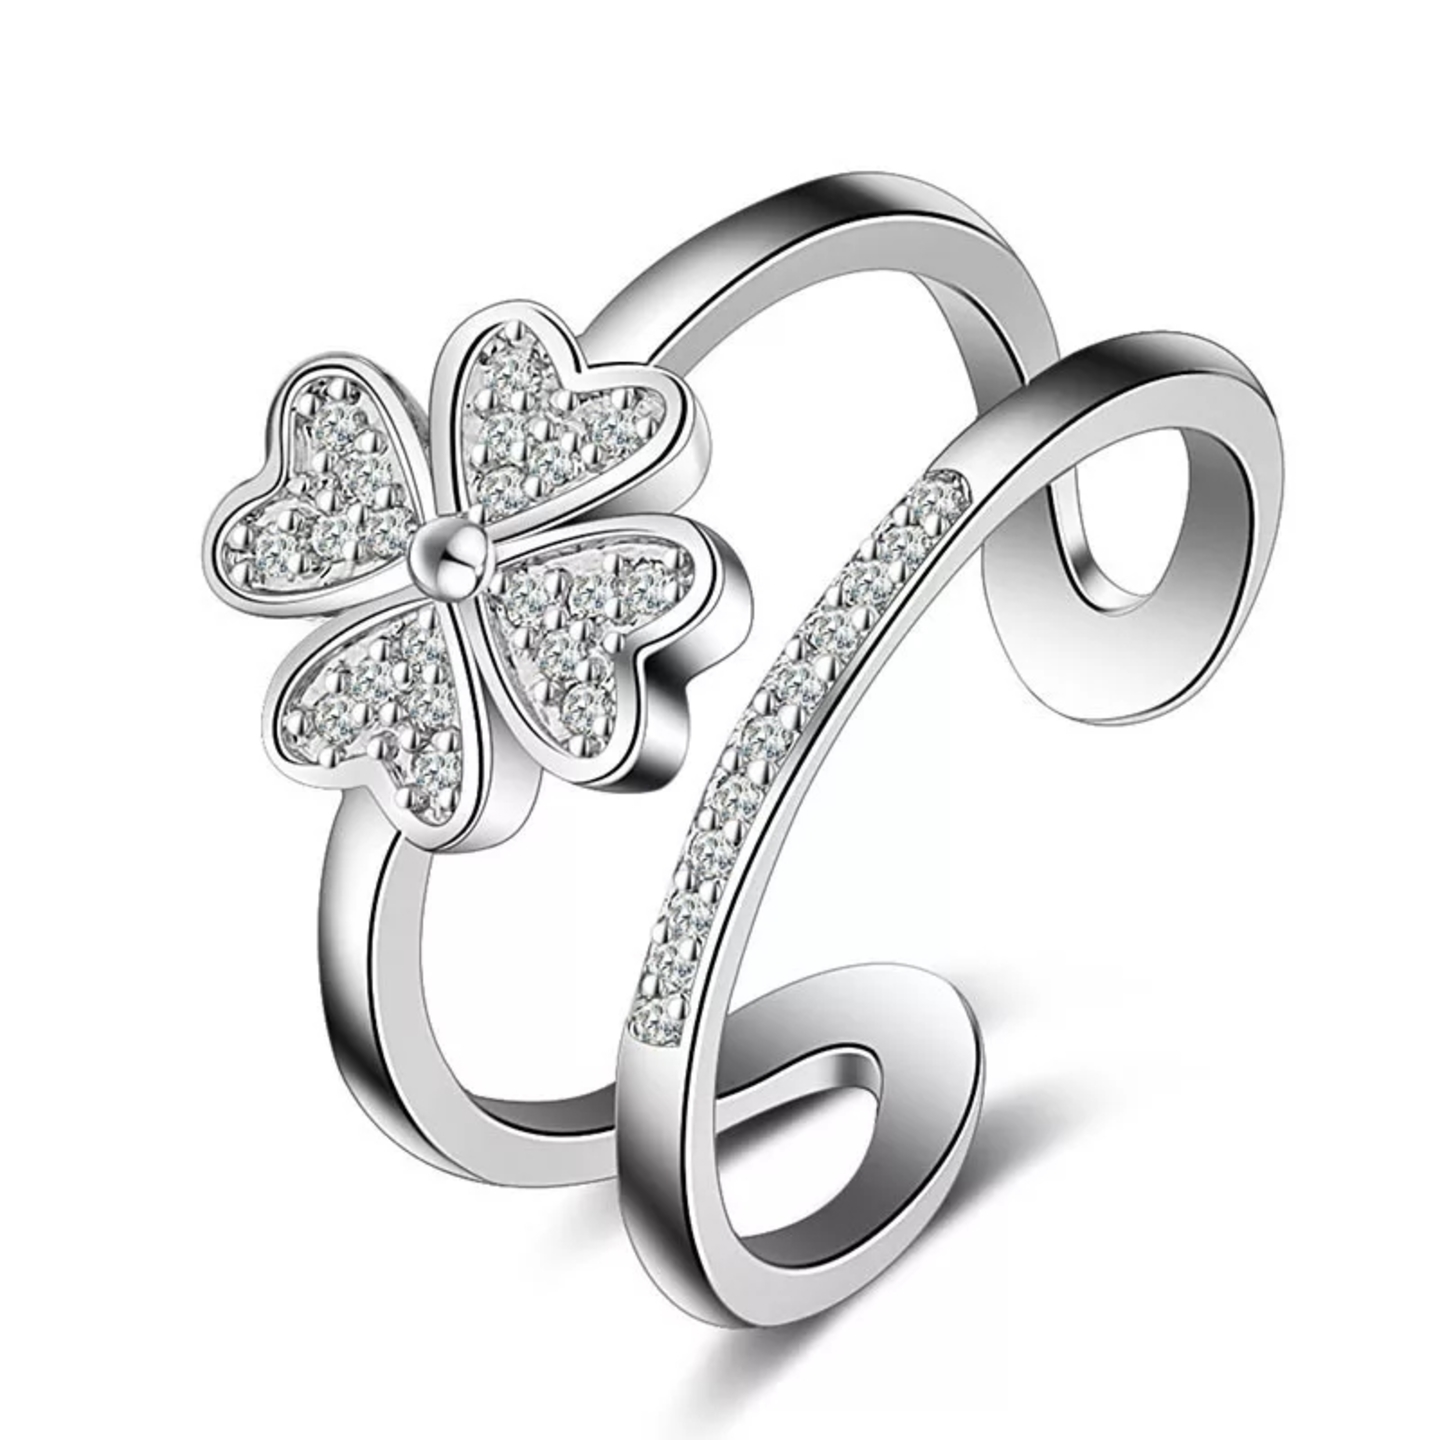 Sterling silver flower ring